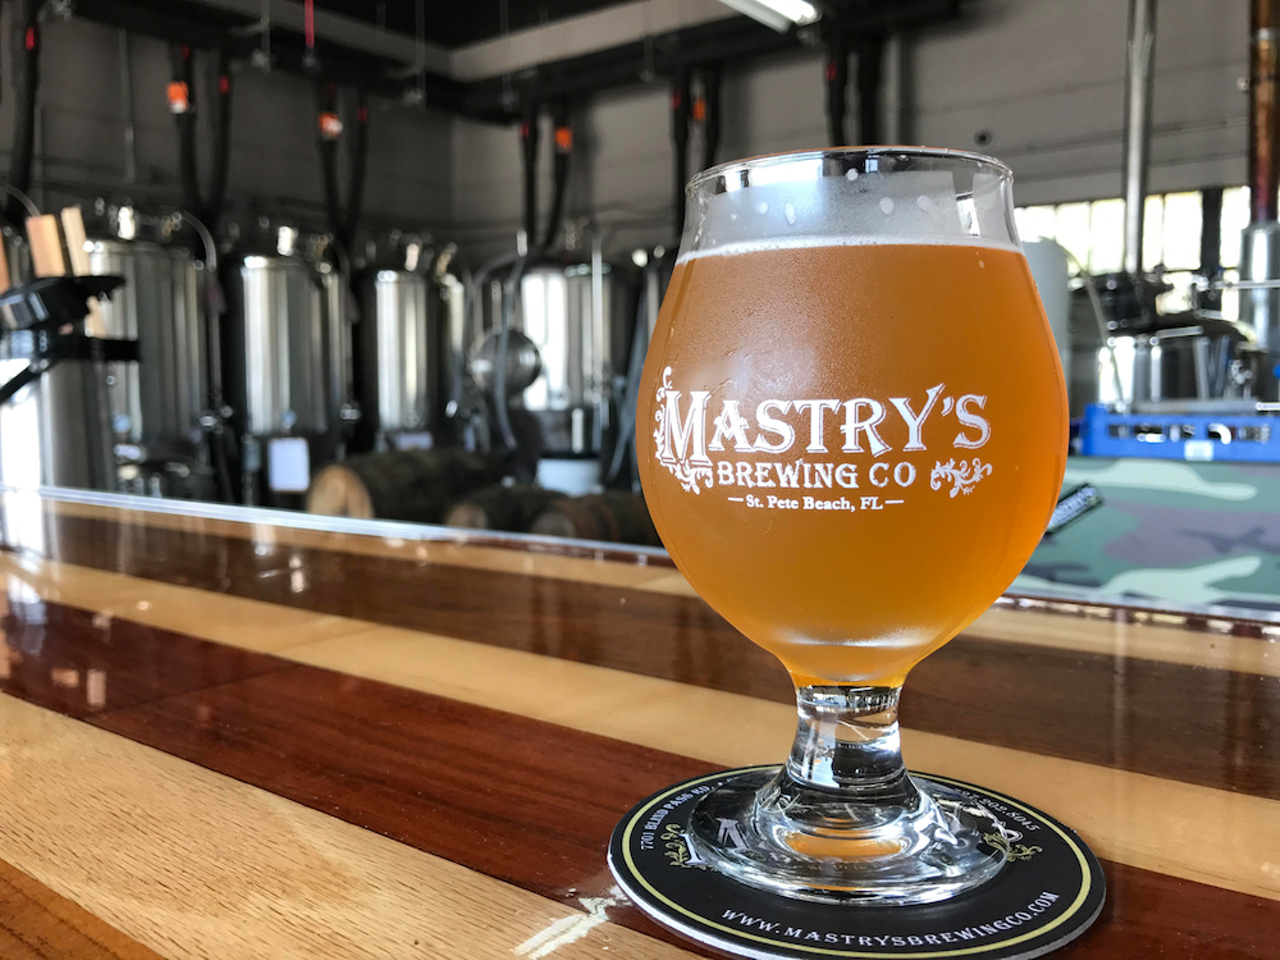 Thursday Night Trivia at Mastry&#146;s on St. Pete Beach
Feb. 7
Photo via Mastry&#146;s Brewing Co.